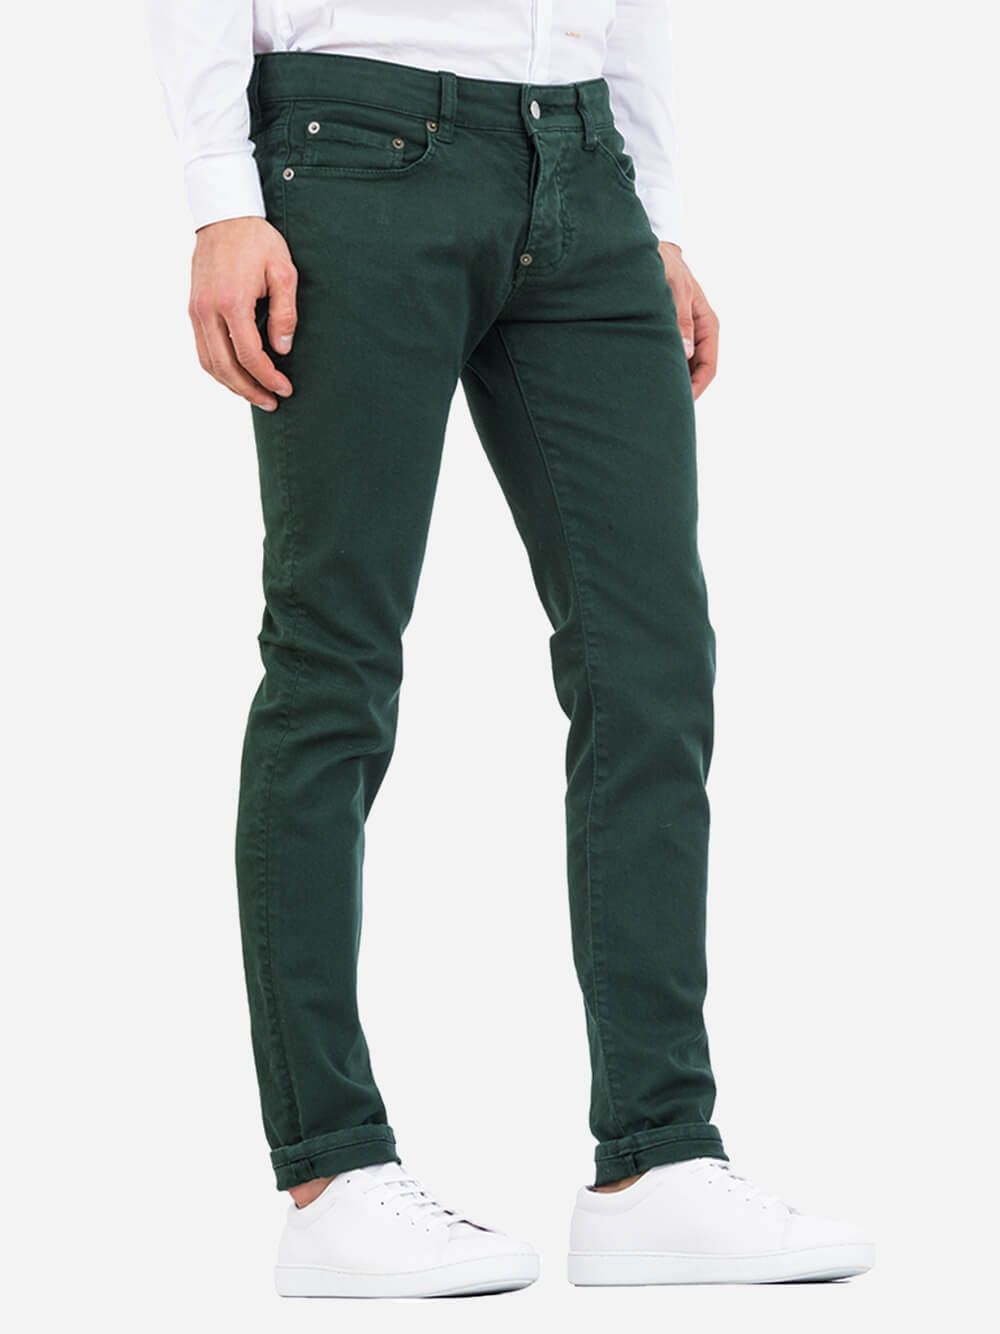 Gentleman Green Jeans | Inimigo Clothing